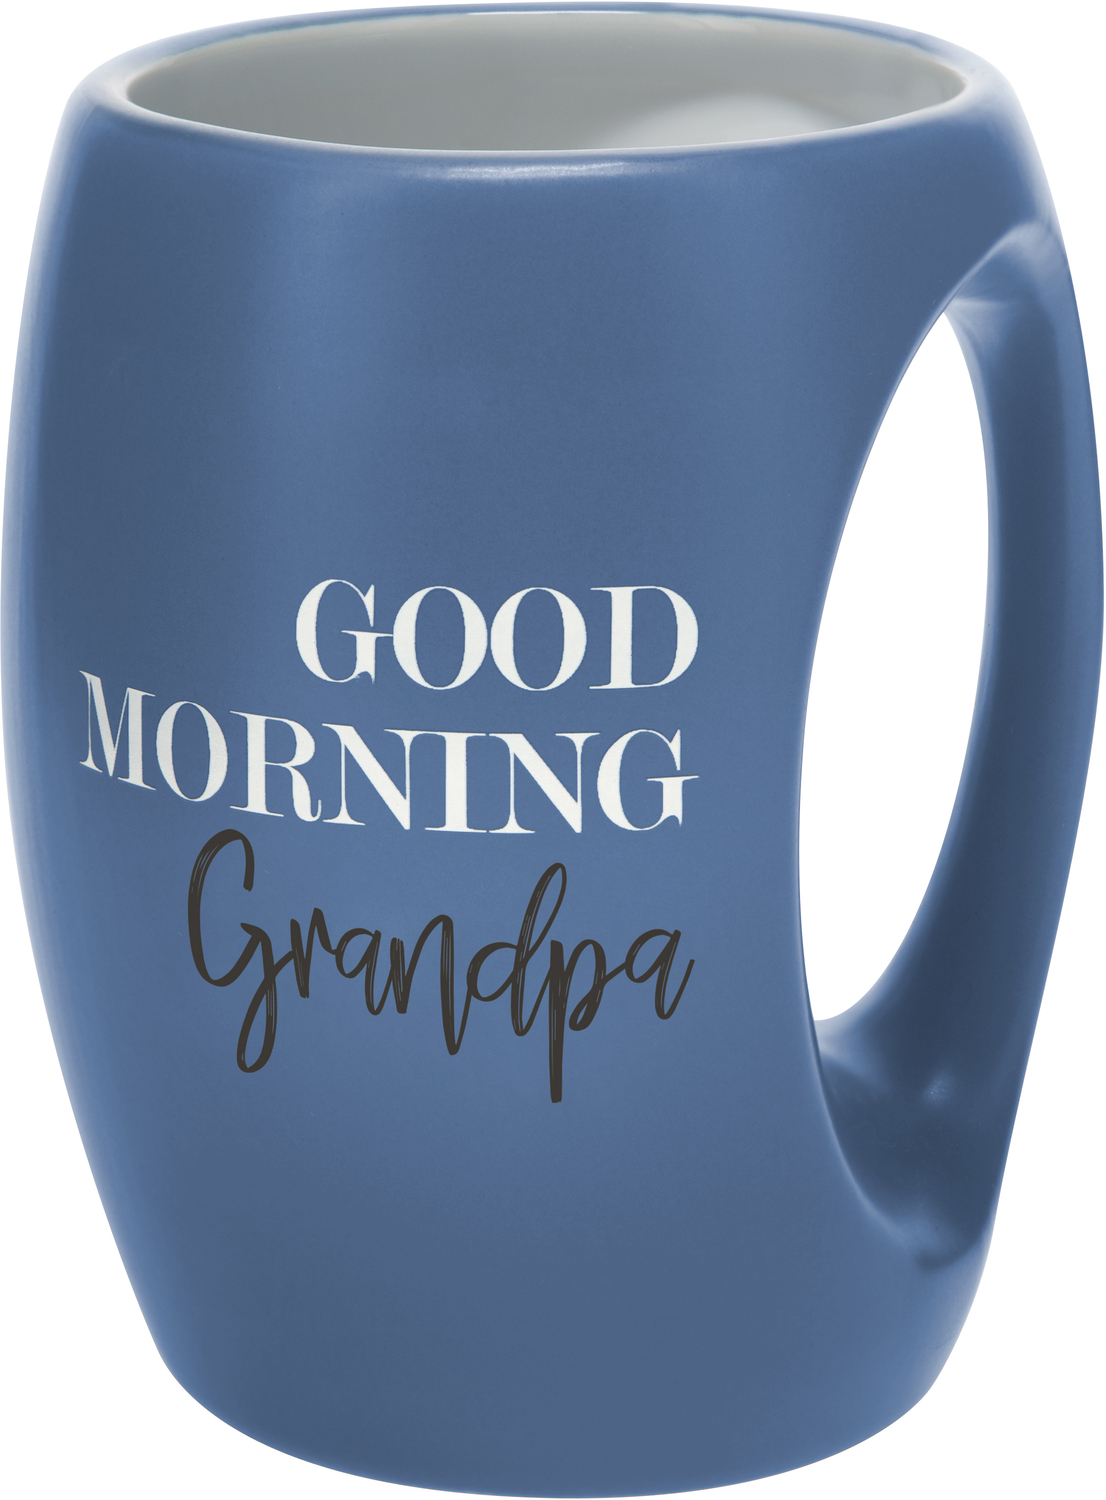 Grandpa by Good Morning - Grandpa - 16 oz Cup